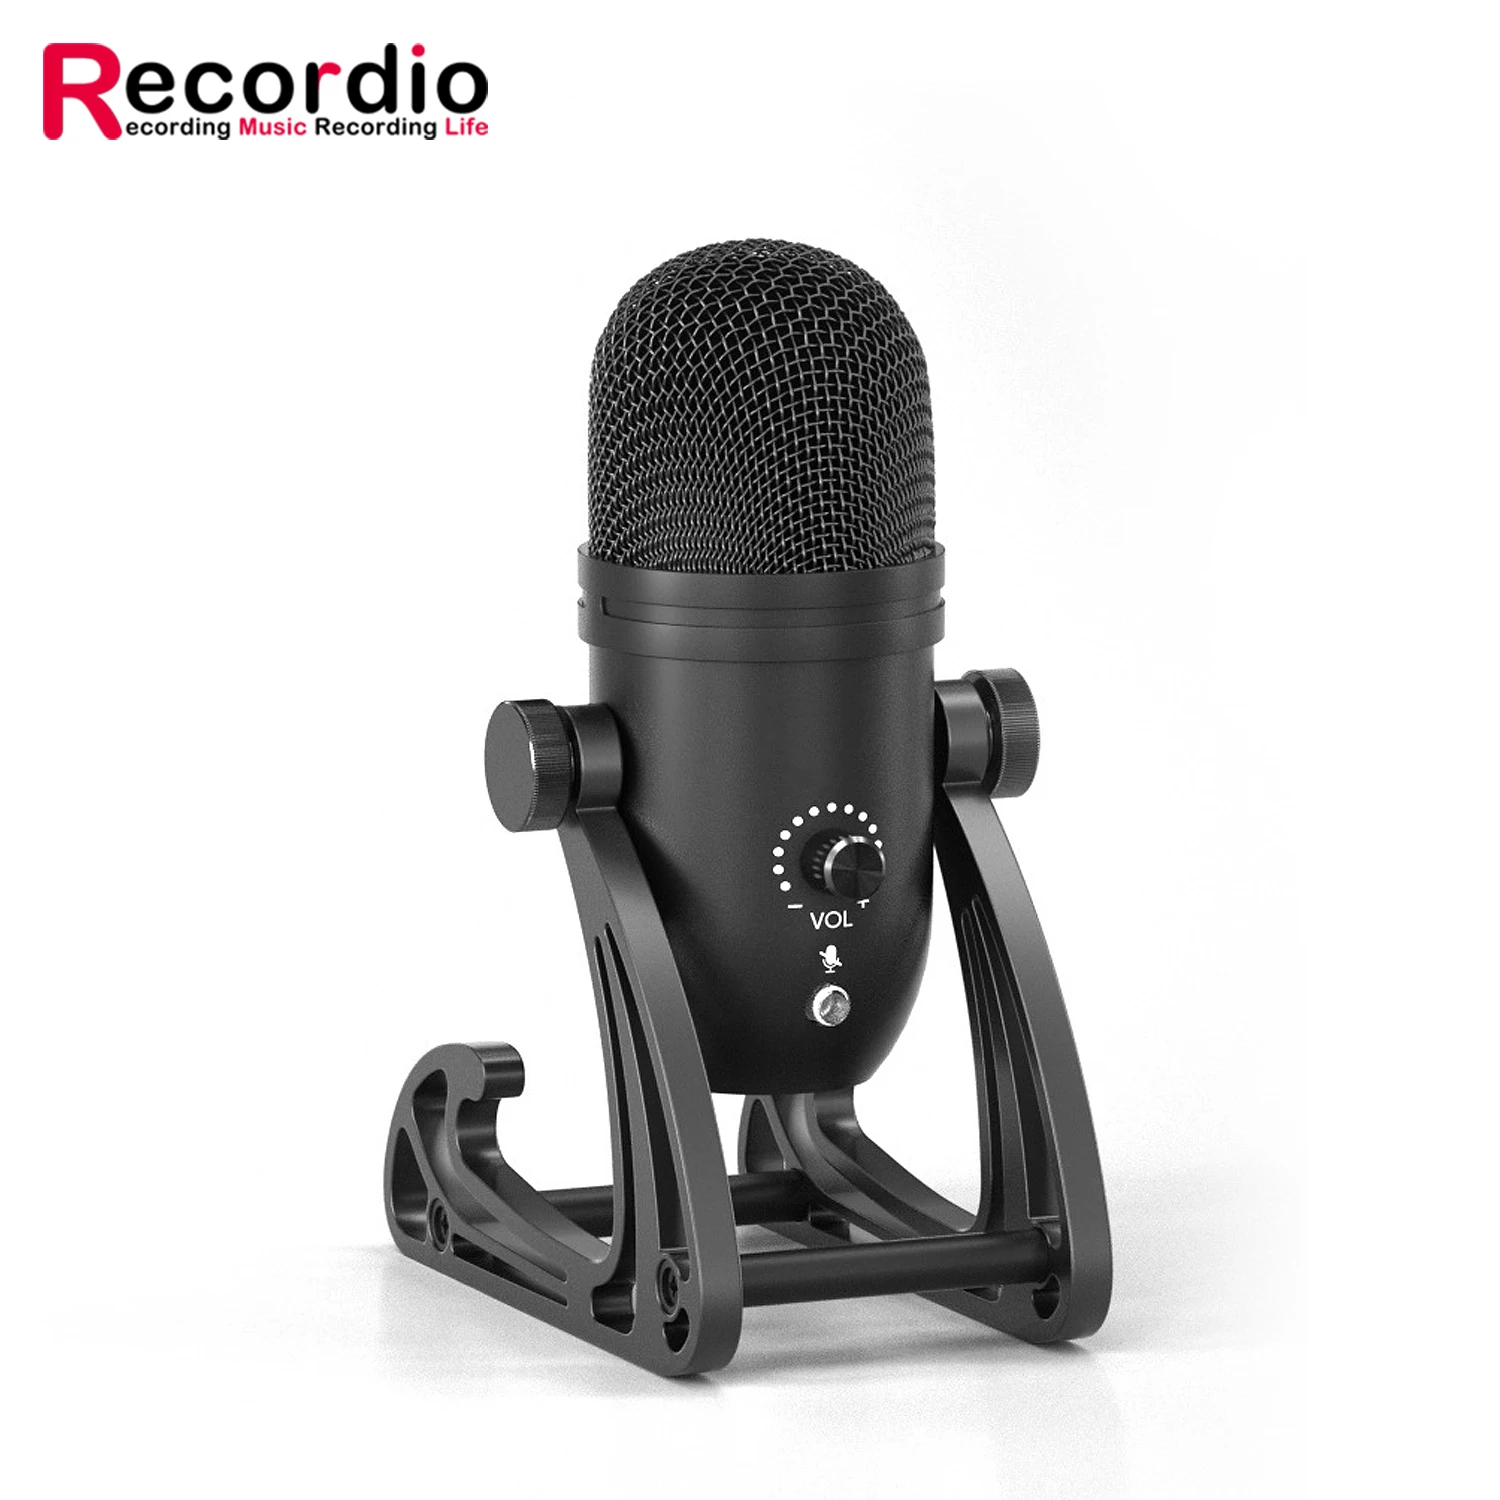 

GAM-U21 Professional USB Condenser Microphone Sled Stand Live Conference Recording Studio Game Desktop Microphone